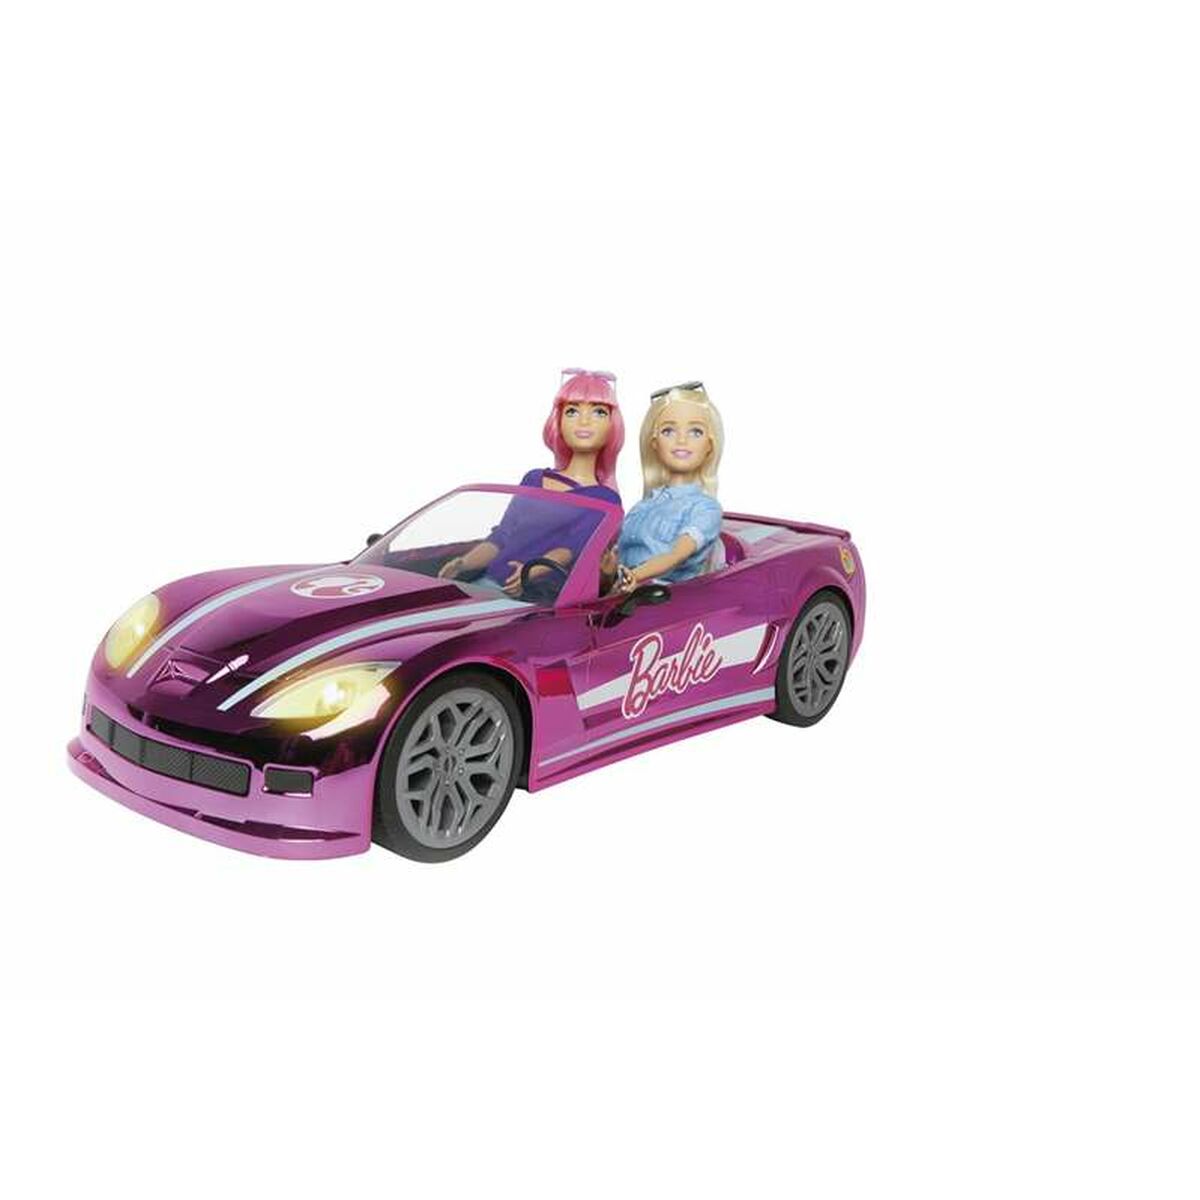 Politiewagen op Afstandsbediening Barbie Dream car 1:10 40 x 17,5 x 12,5 cm